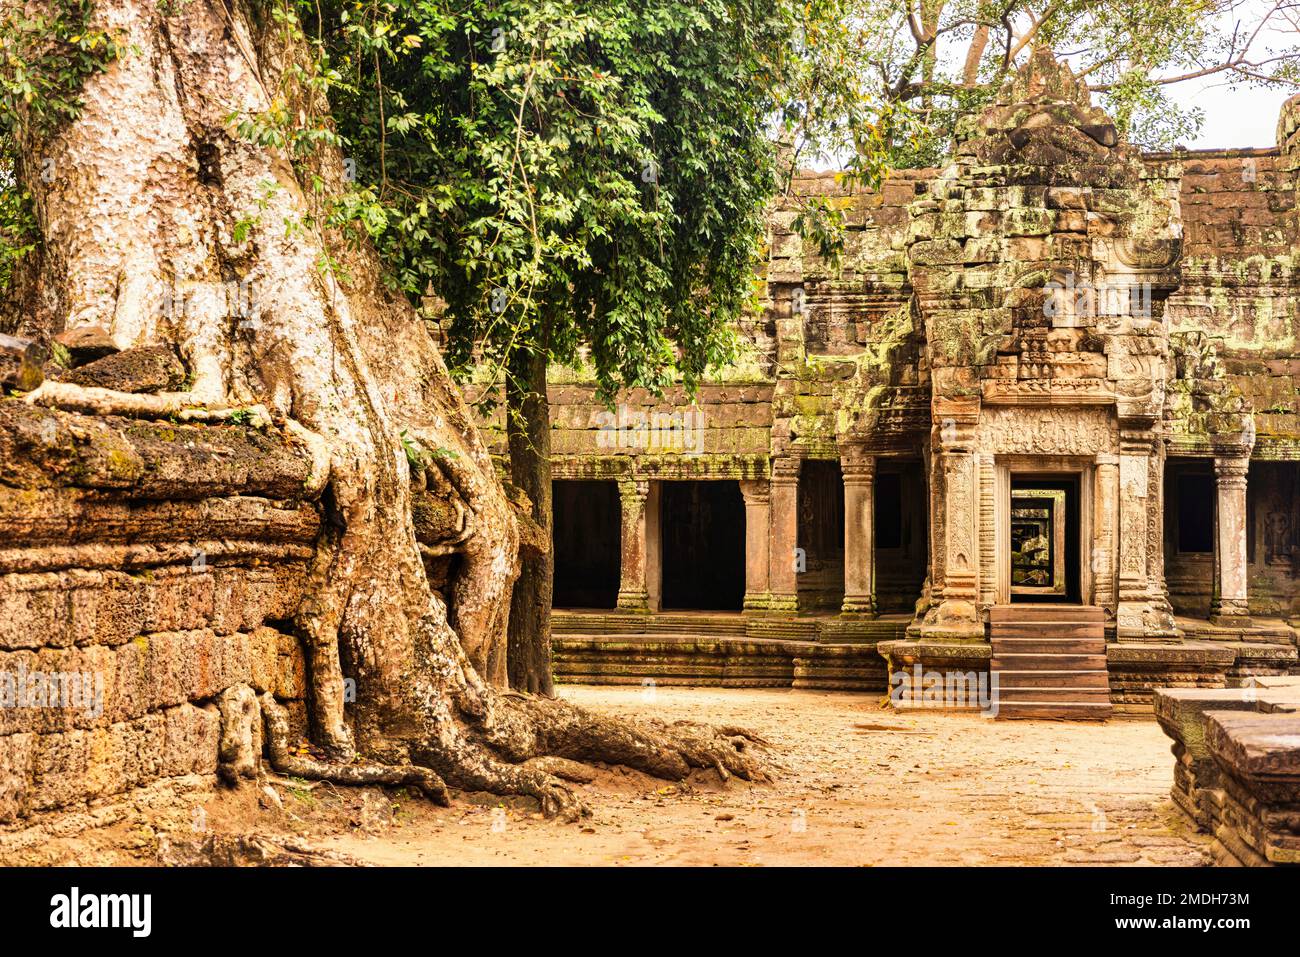 TA Prohm Tempel des Angkor Wat Komplexes - SEAM Reap, Kambodscha. Stockfoto